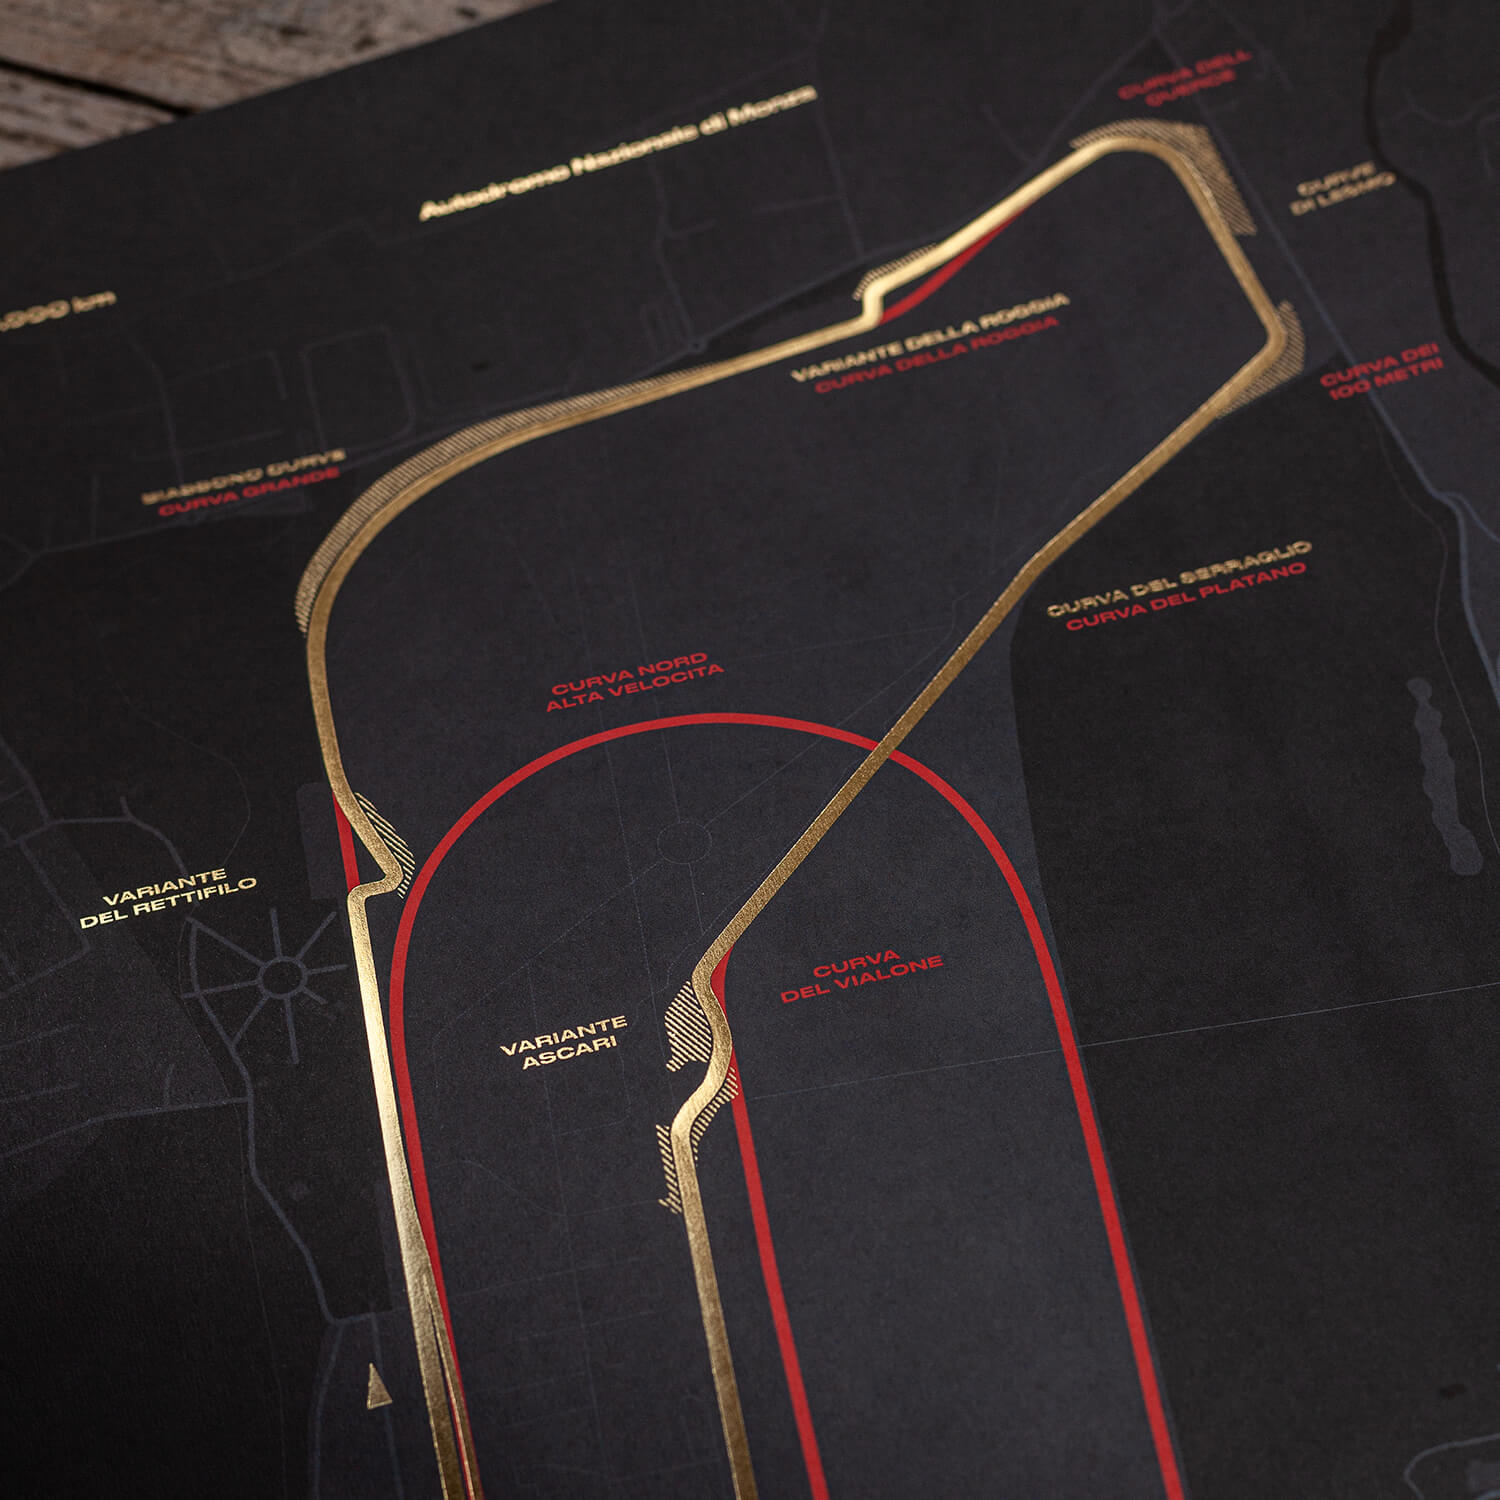 Circuit de Monza - Track Evolution - 100ème anniversaire | Edition collector